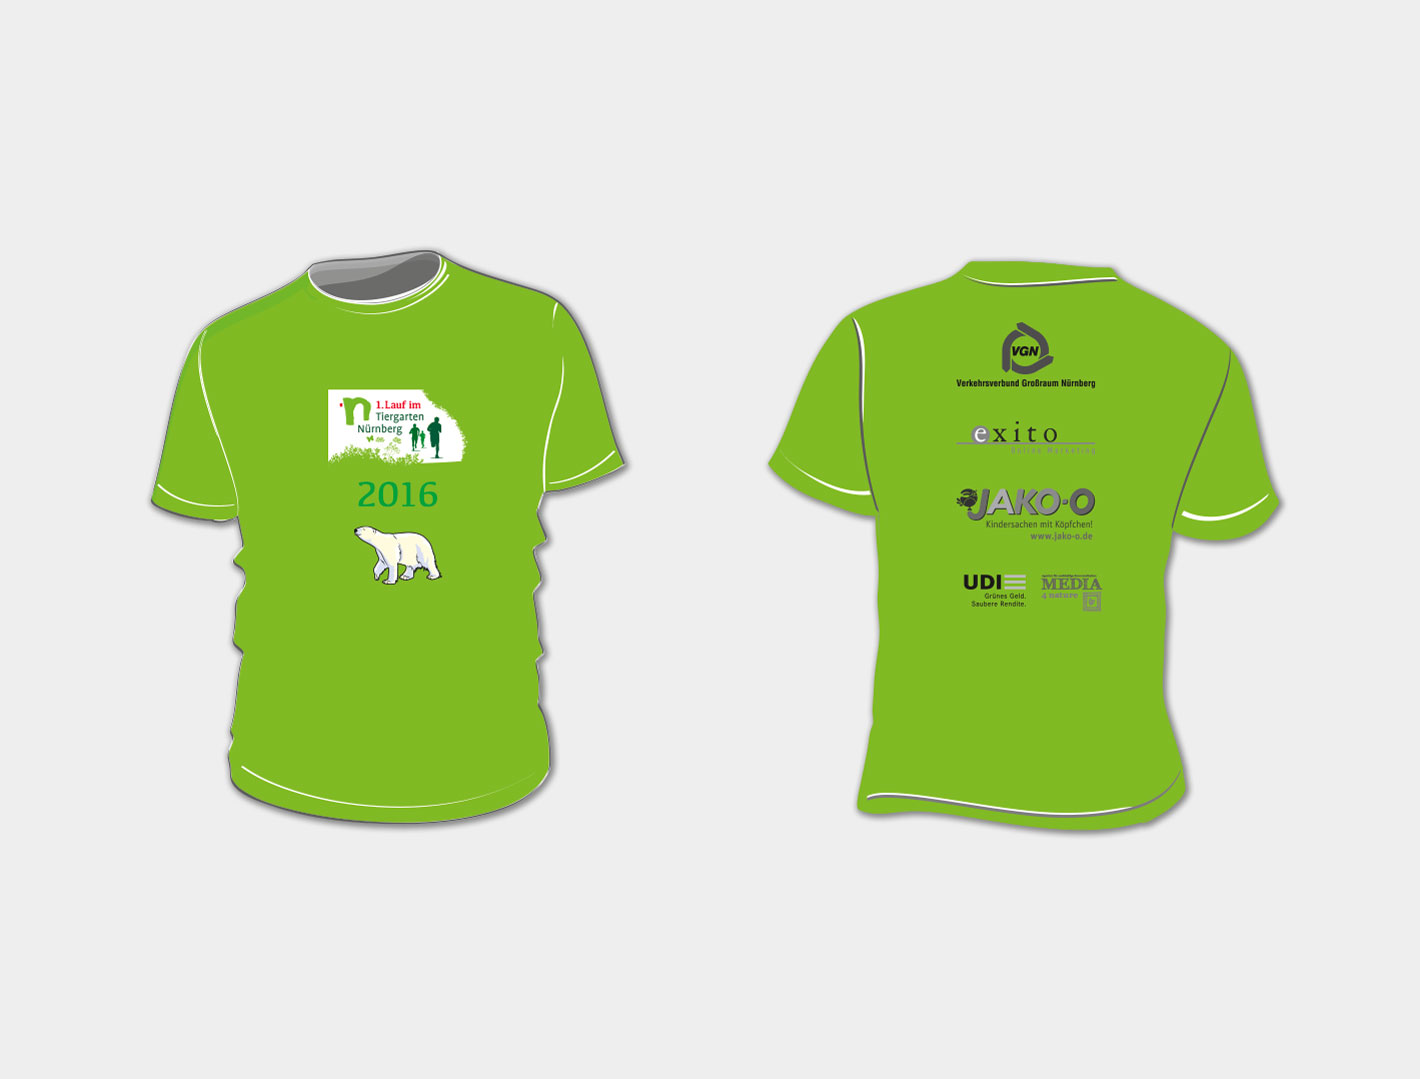 Tiergartenlauf Shirt 2016